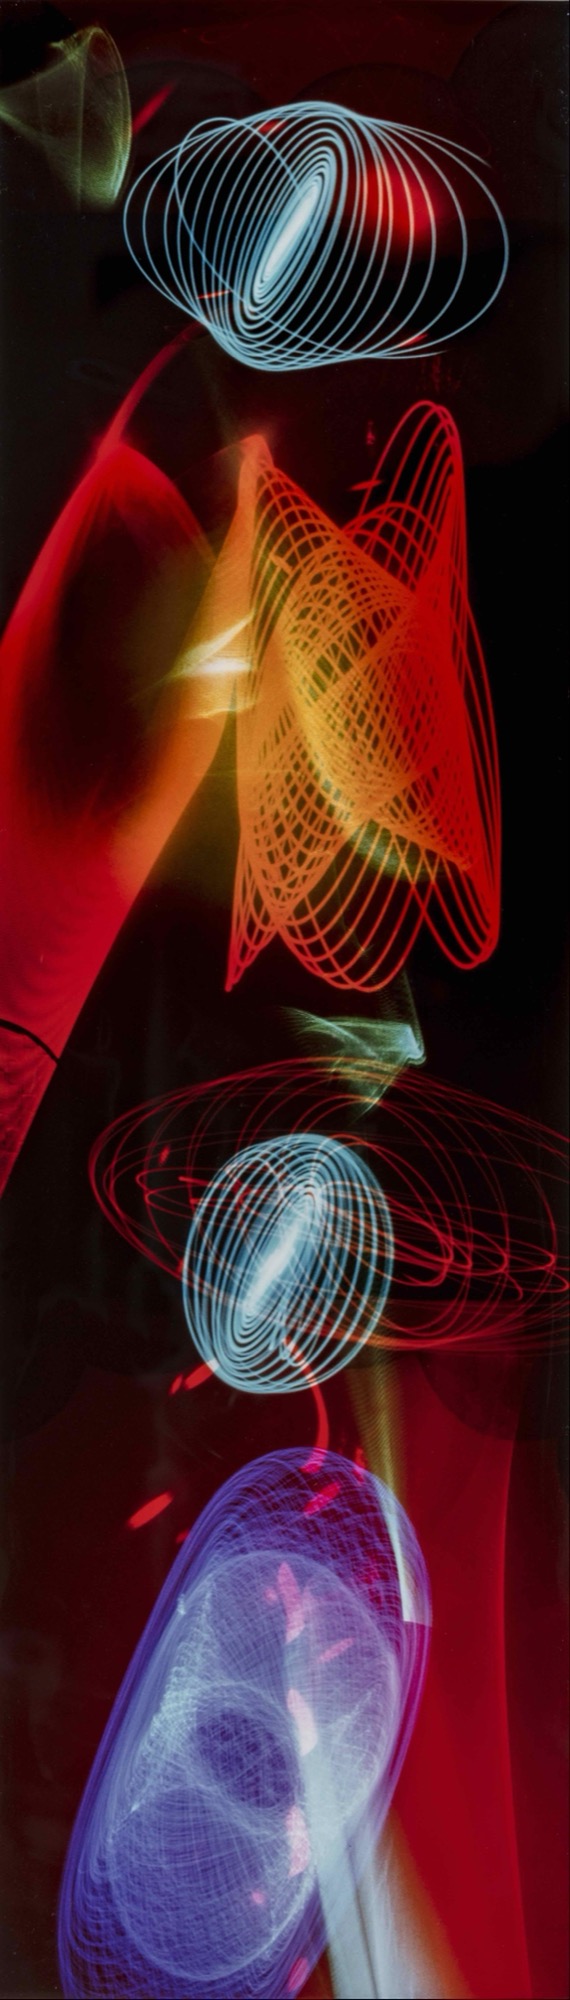 Josef Stanislaw Ostoja-Kotkowski, <em>Laser light composition</em>, 1980s, Adelaide, direct positive colour photograph, 104.9 x 30.1 cm (sheet), Art Gallery of South Australia, Adelaide, gift of Andrew S.R Booth and Edward H.S. Booth, 1995. © Estate of J S Ostoja-Kotkowski.